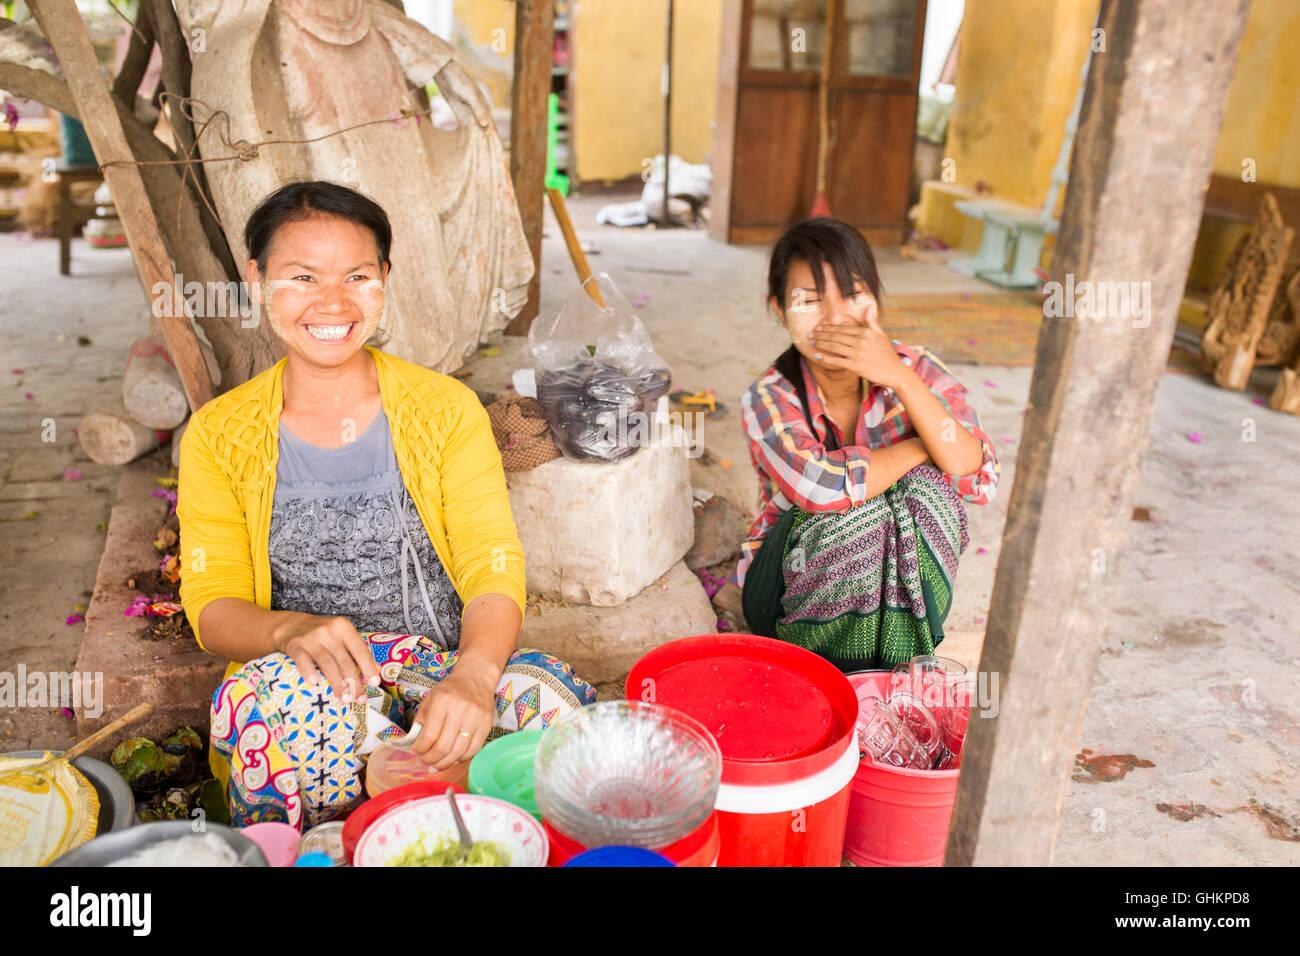 Burmese woman with beaming smile, preparing food while daughter watches on, Mandalay Myanmar. Stock Photo